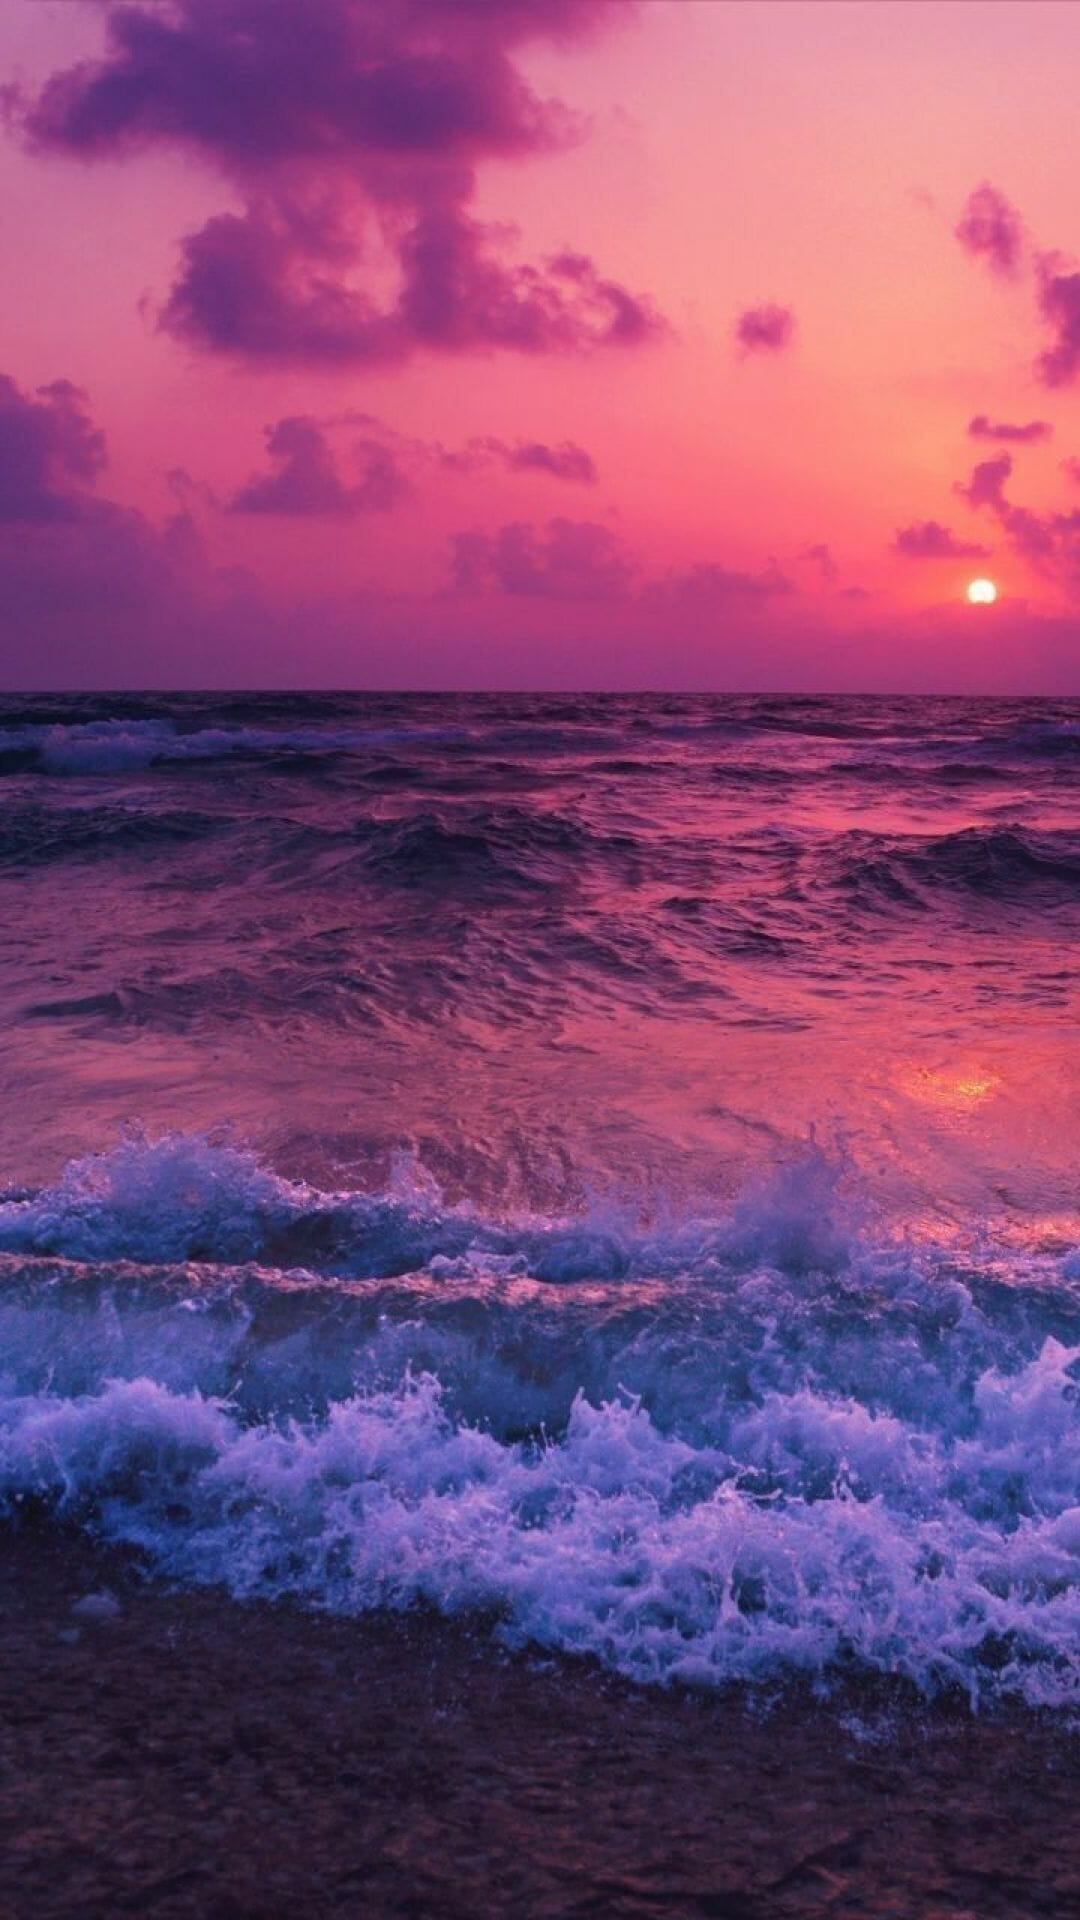 IPhone wallpaper of a beautiful sunset over the ocean - Sunset, ocean